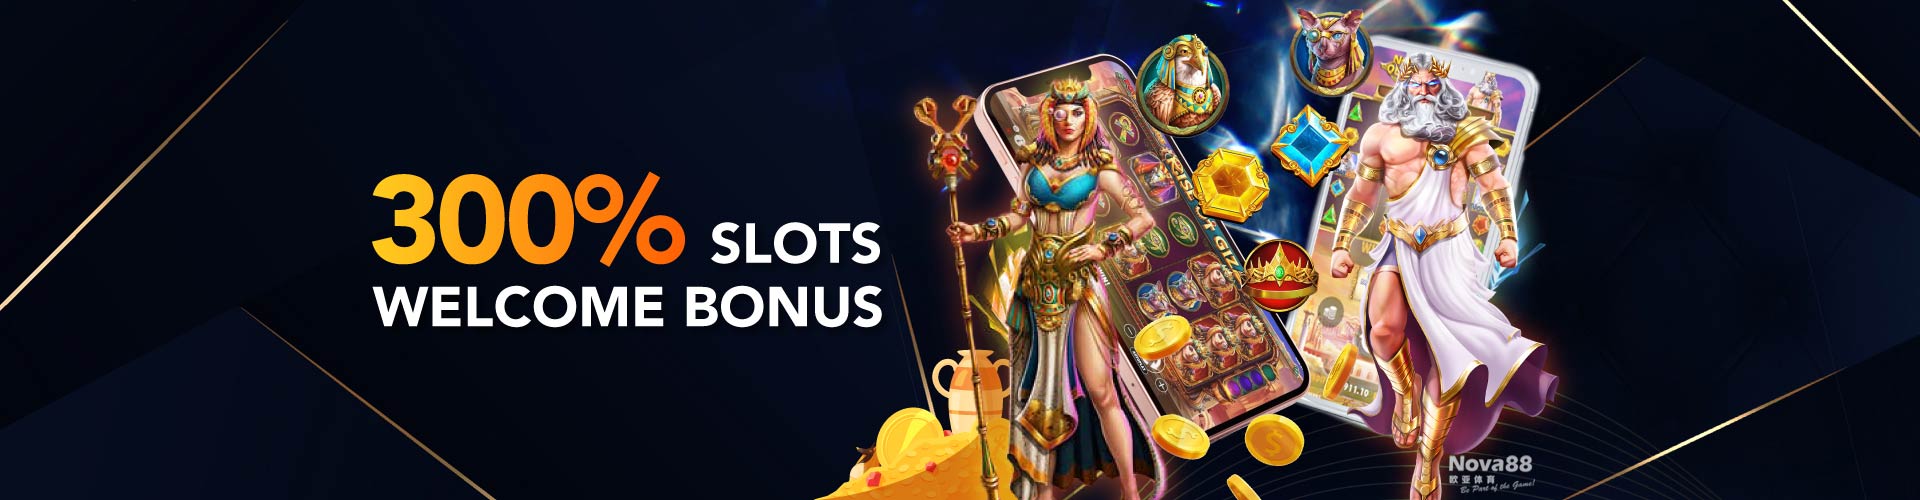 Nova88 300% Slot Welcome Bonus